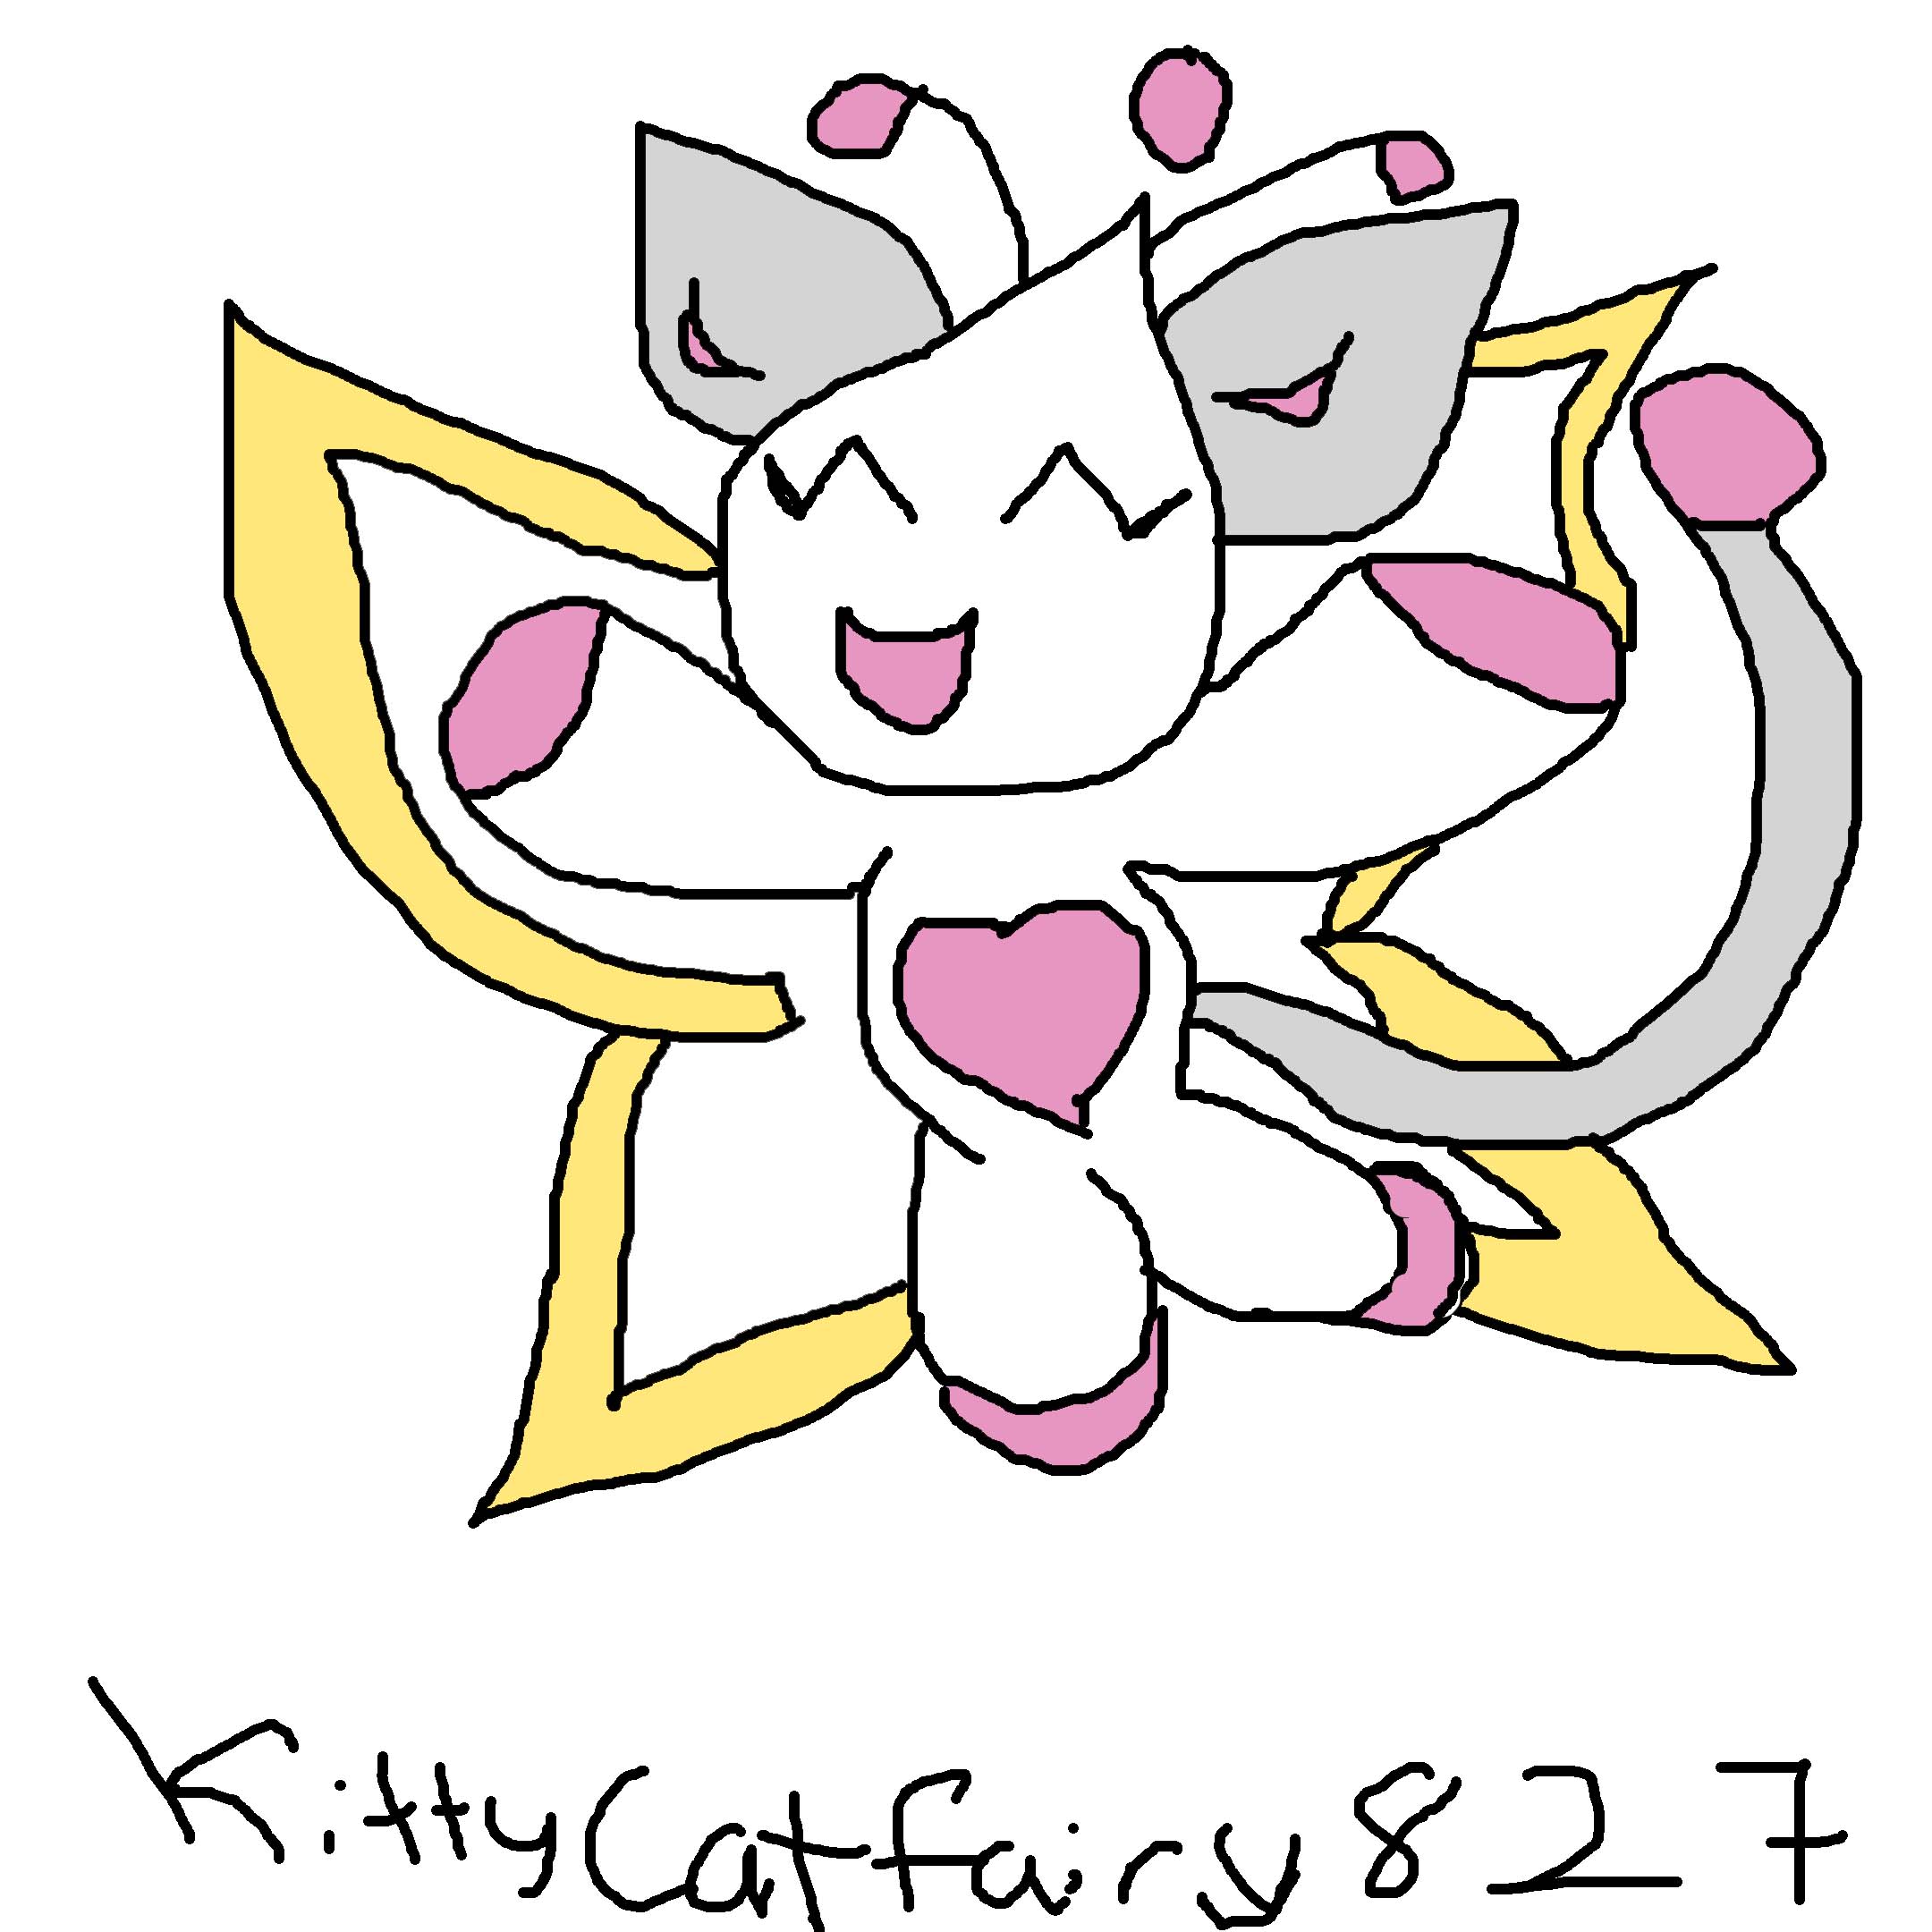 kittycatfairy827 by sam01